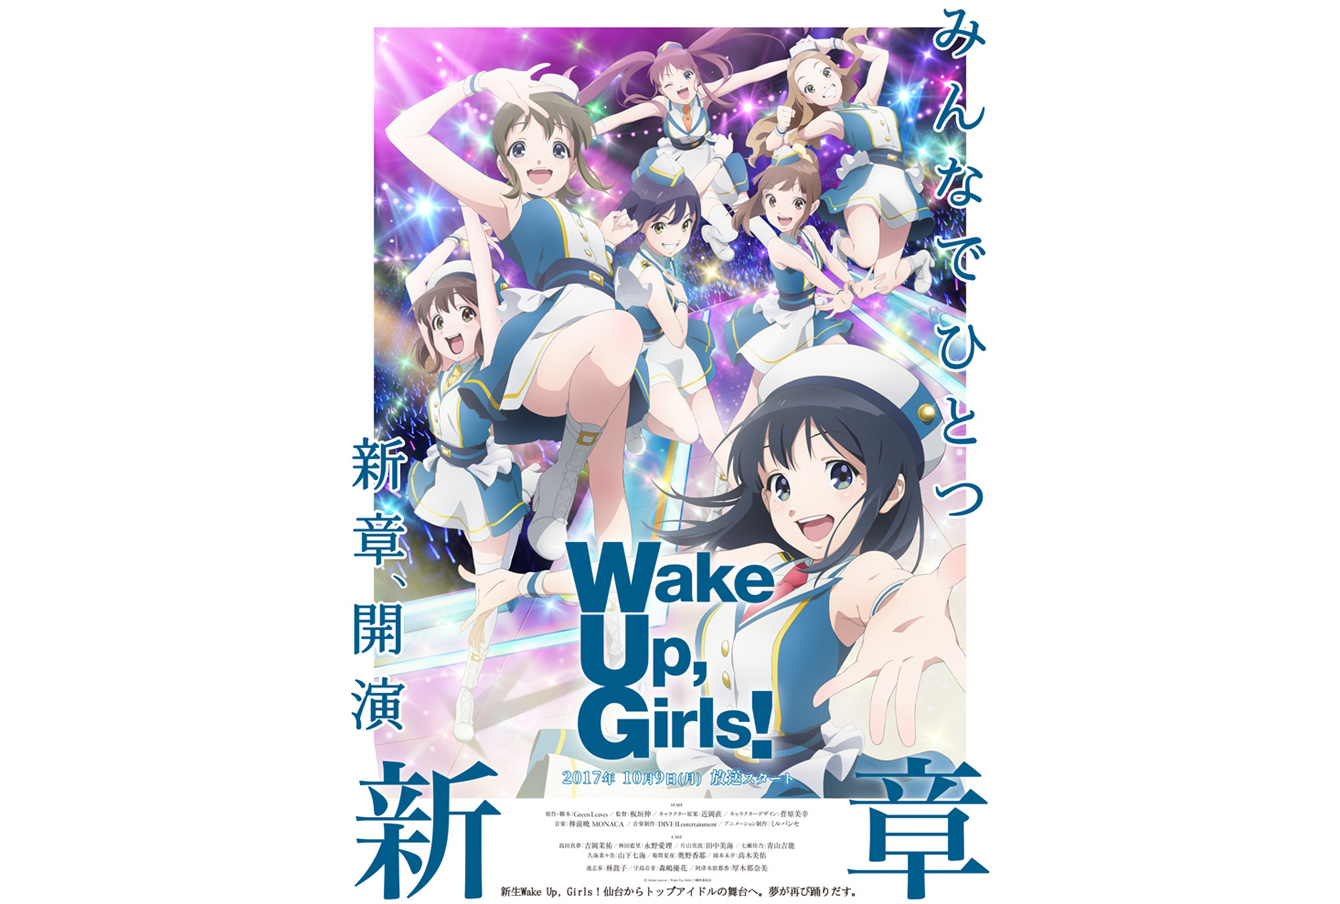 《Wake Up,Girls!新章》公开主视觉图及上映会